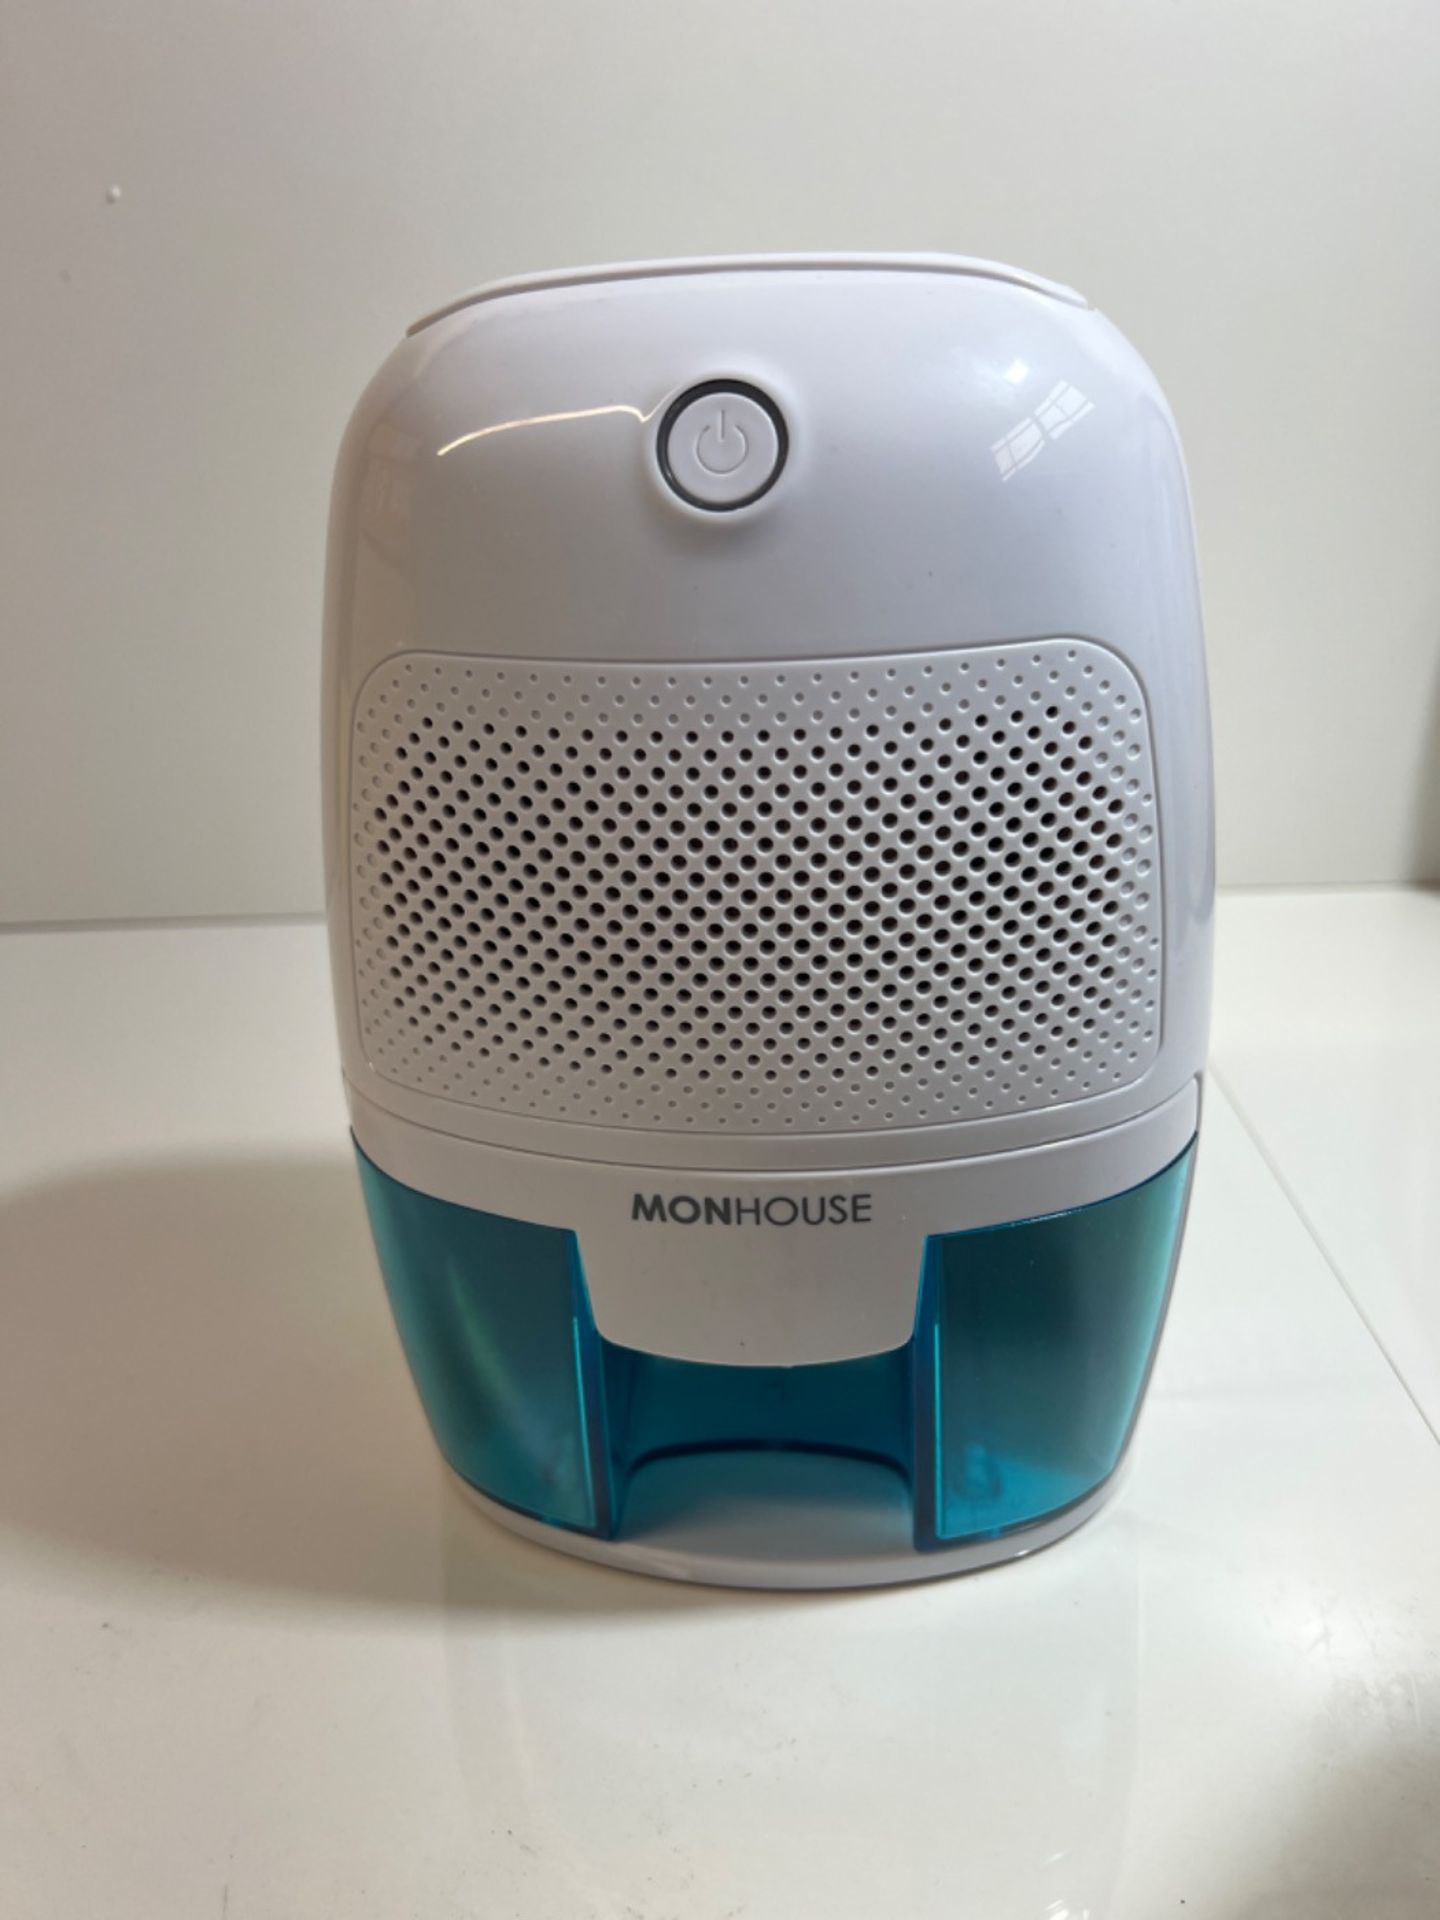 MONHOUSE Dehumidifier 600ml Portable, Compact & Quiet Moisture Absorber - Mini Air Dehumidifier for - Image 2 of 3